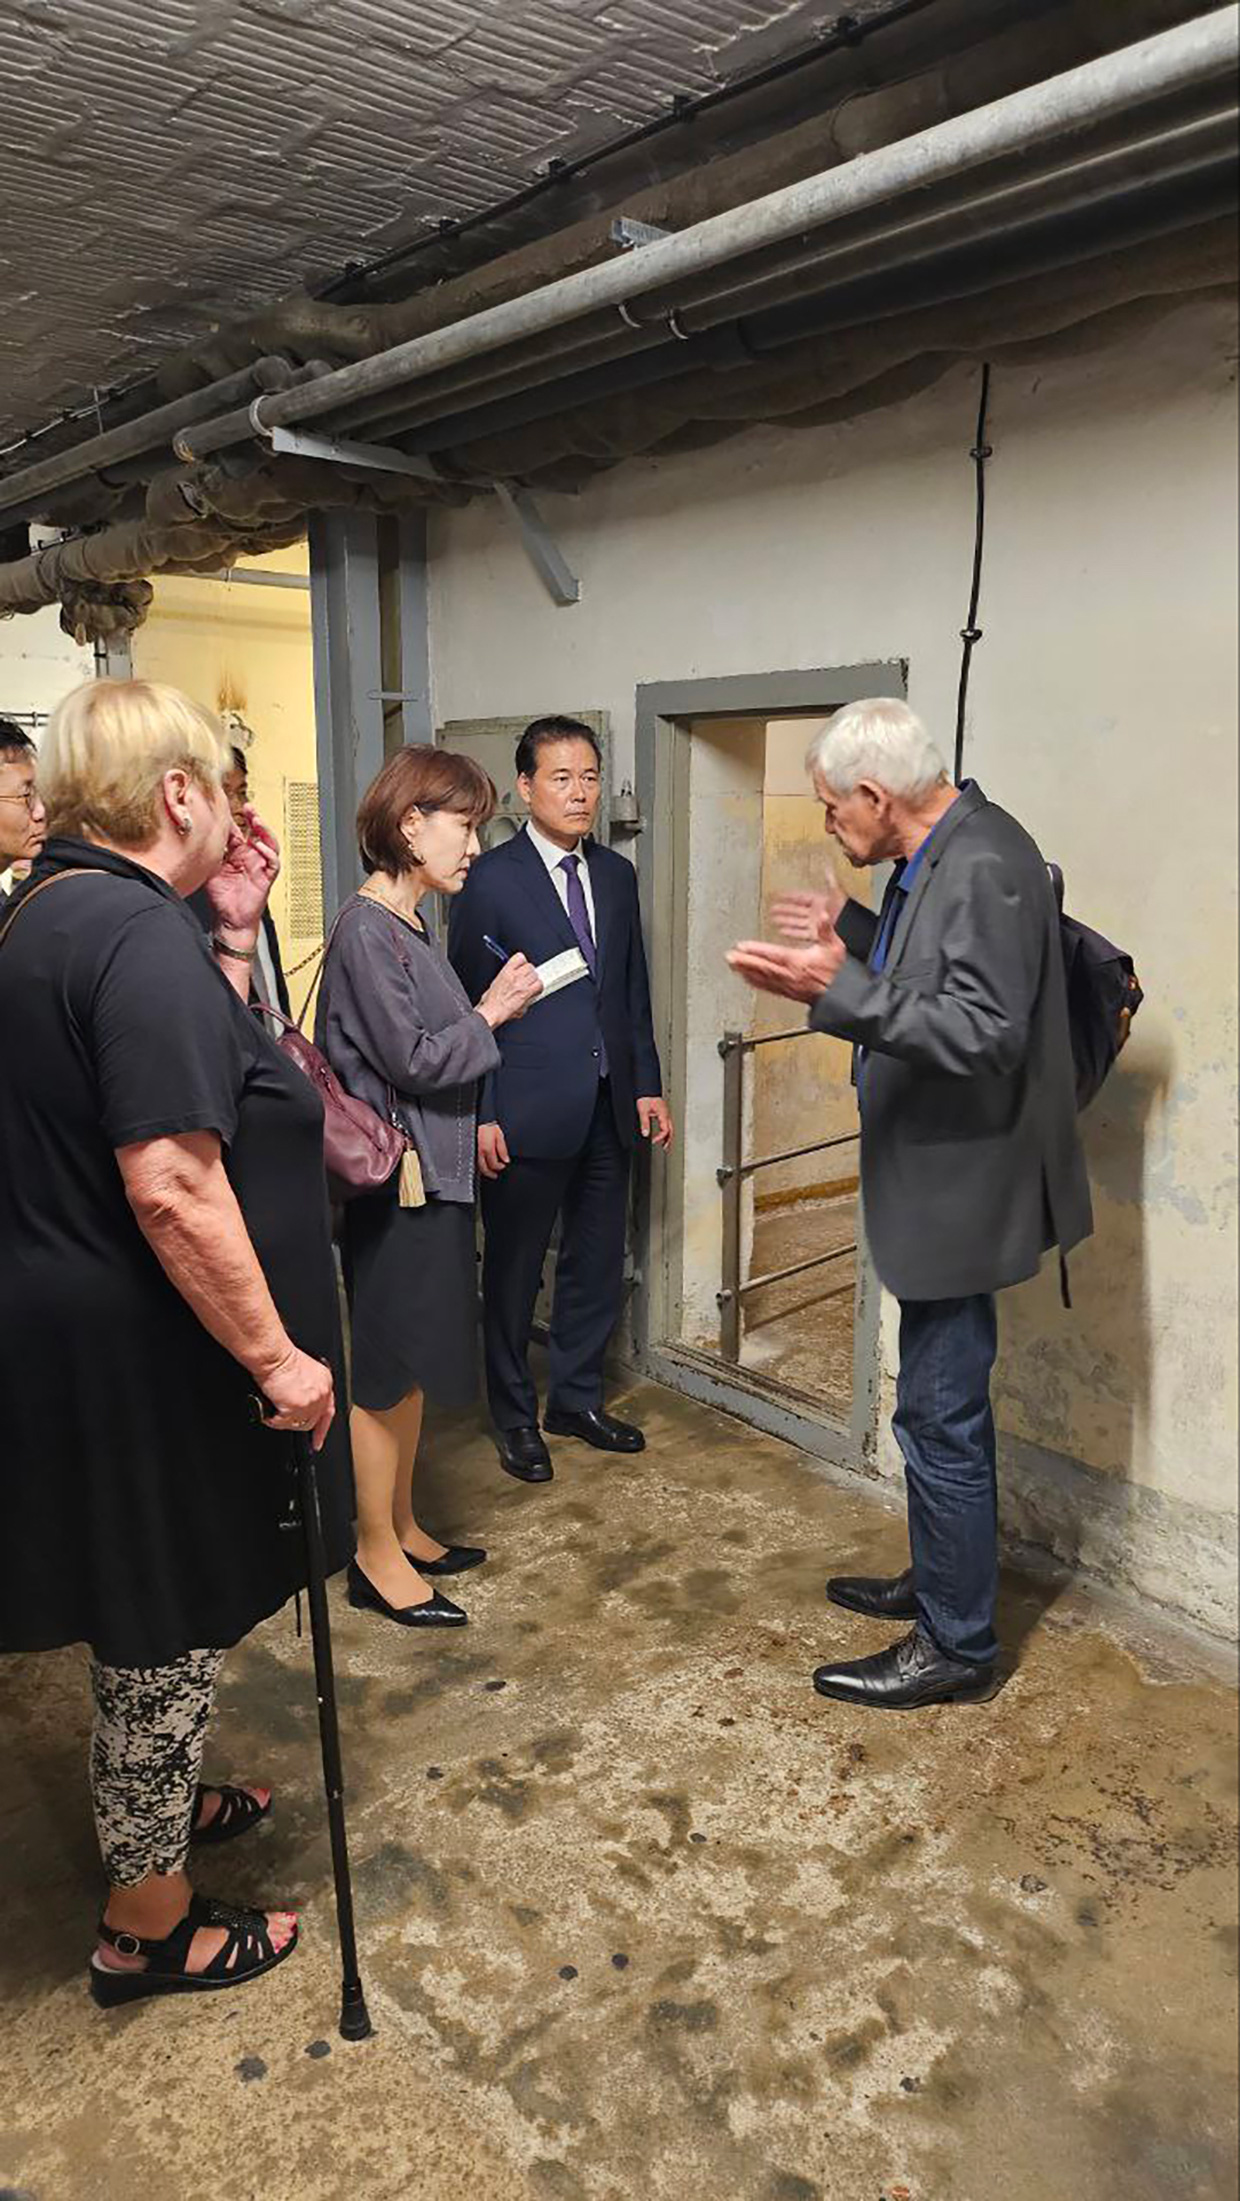 Minister Kim Yung Ho visits the UK and Germany image04